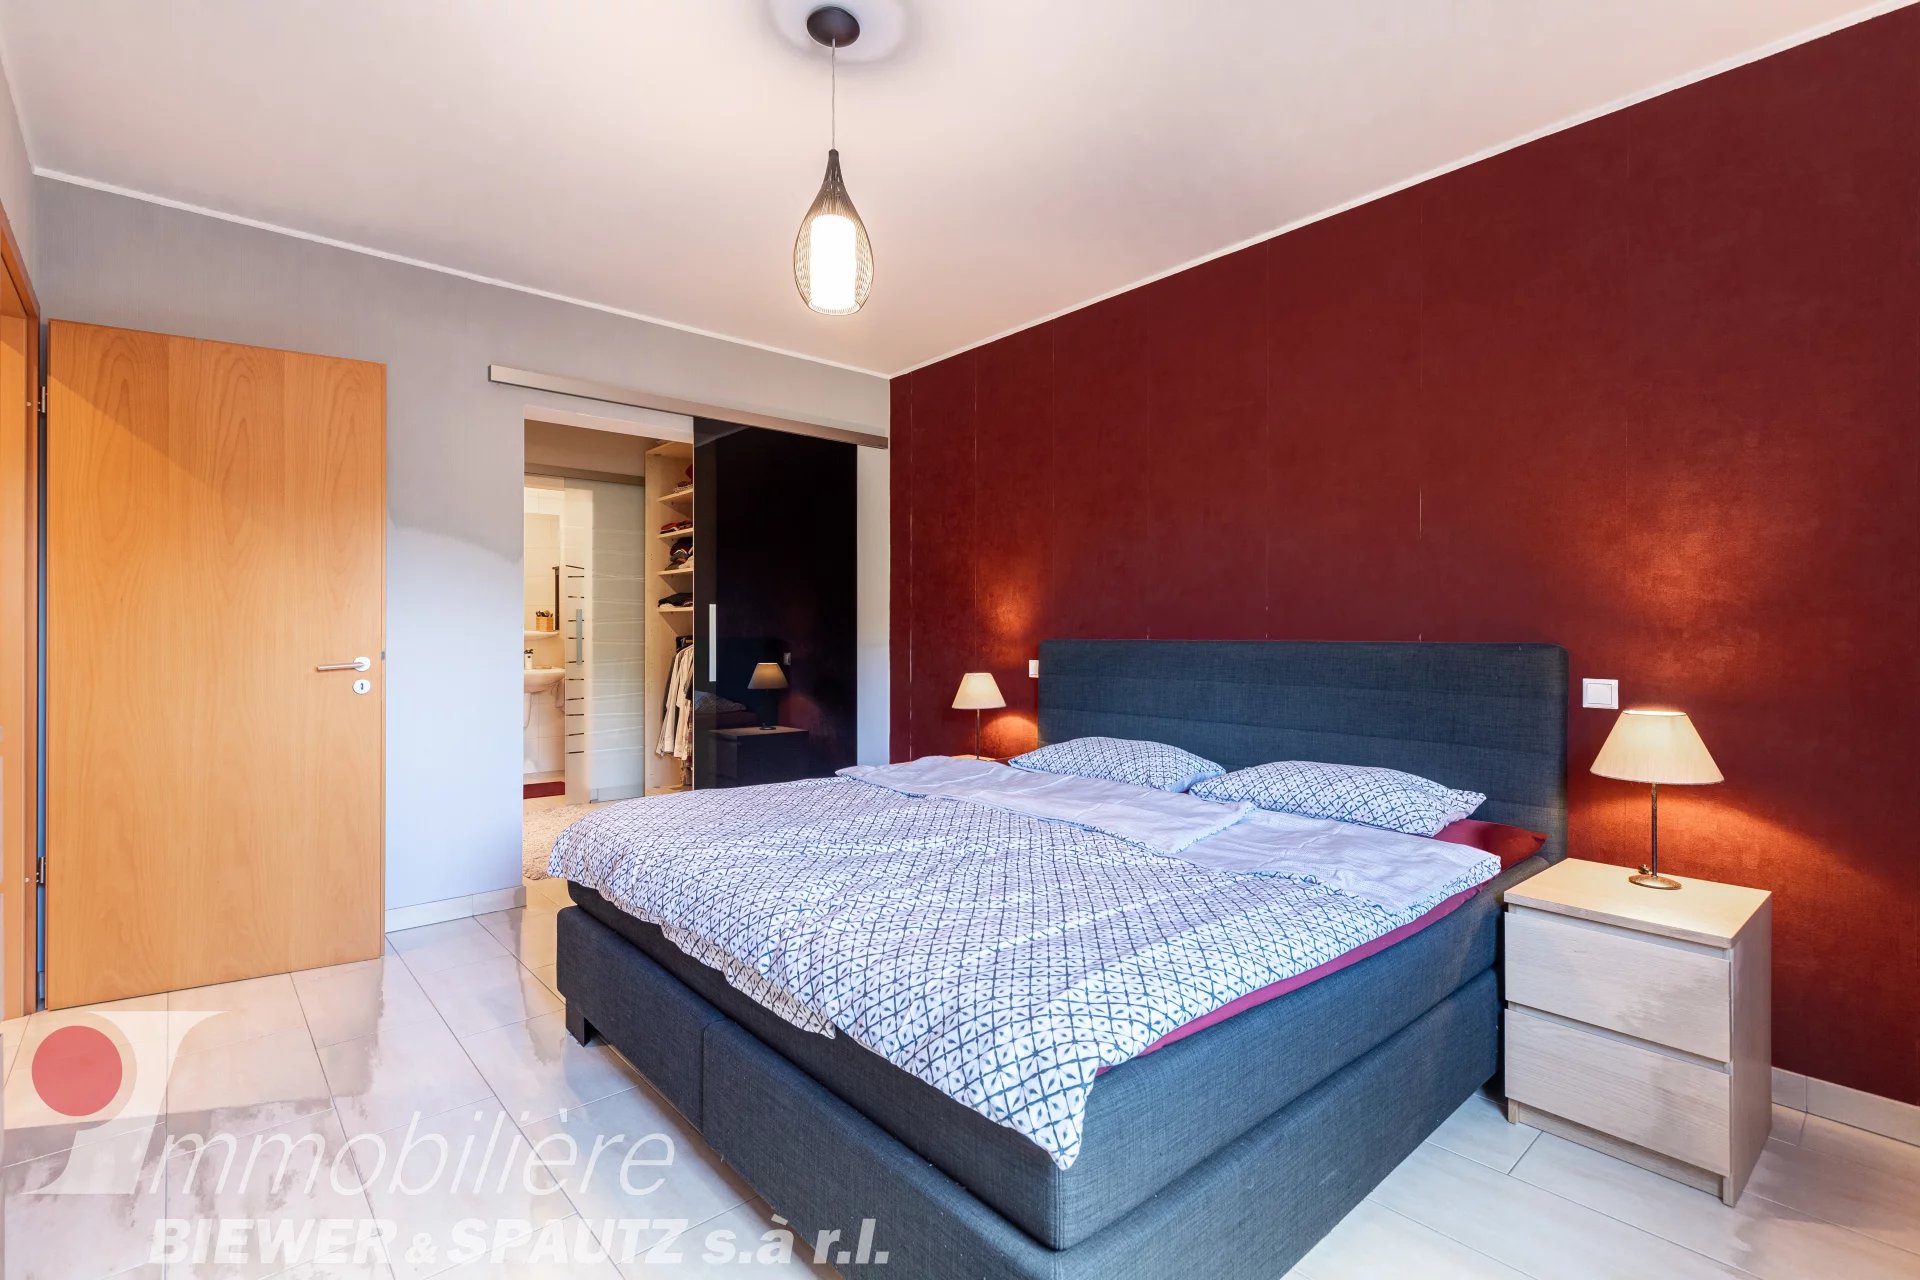 FOR SALE - 3 bedroom duplex apartment in Rosport